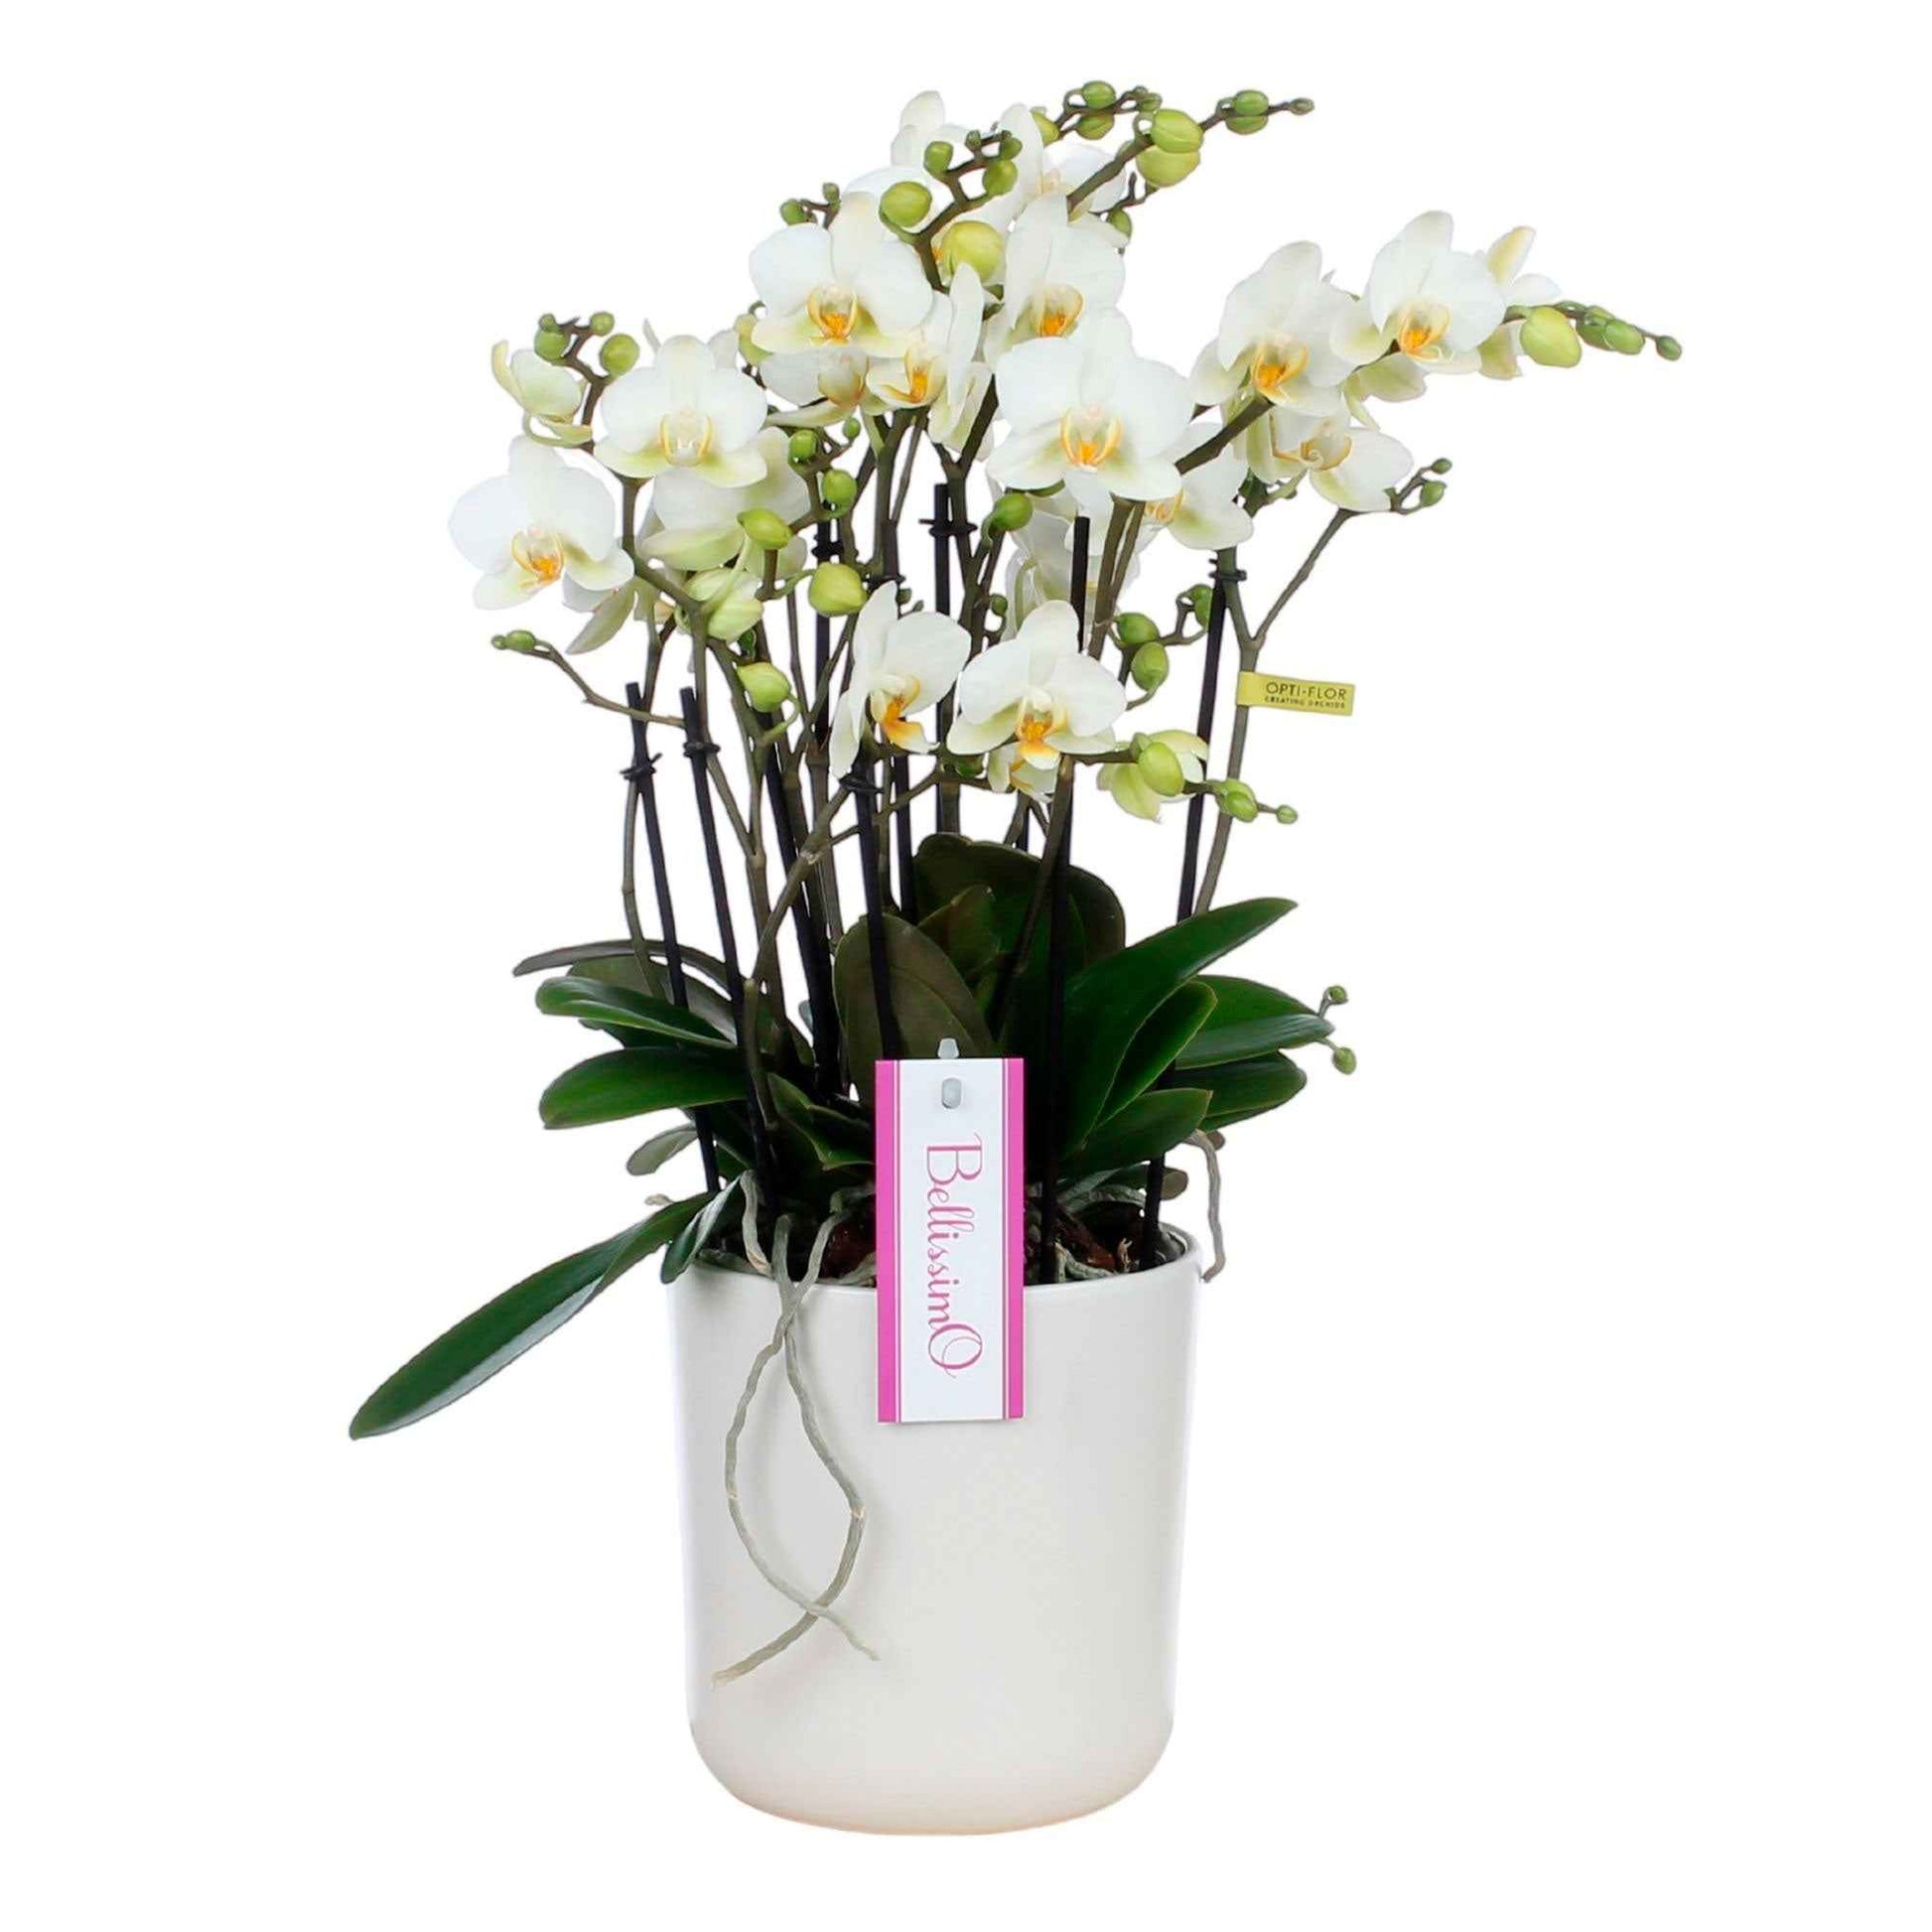 Vlinderorchidee Phalaenopsis 'Bellisimo Bella' Wit incl. sierpot - Bloeiende kamerplanten